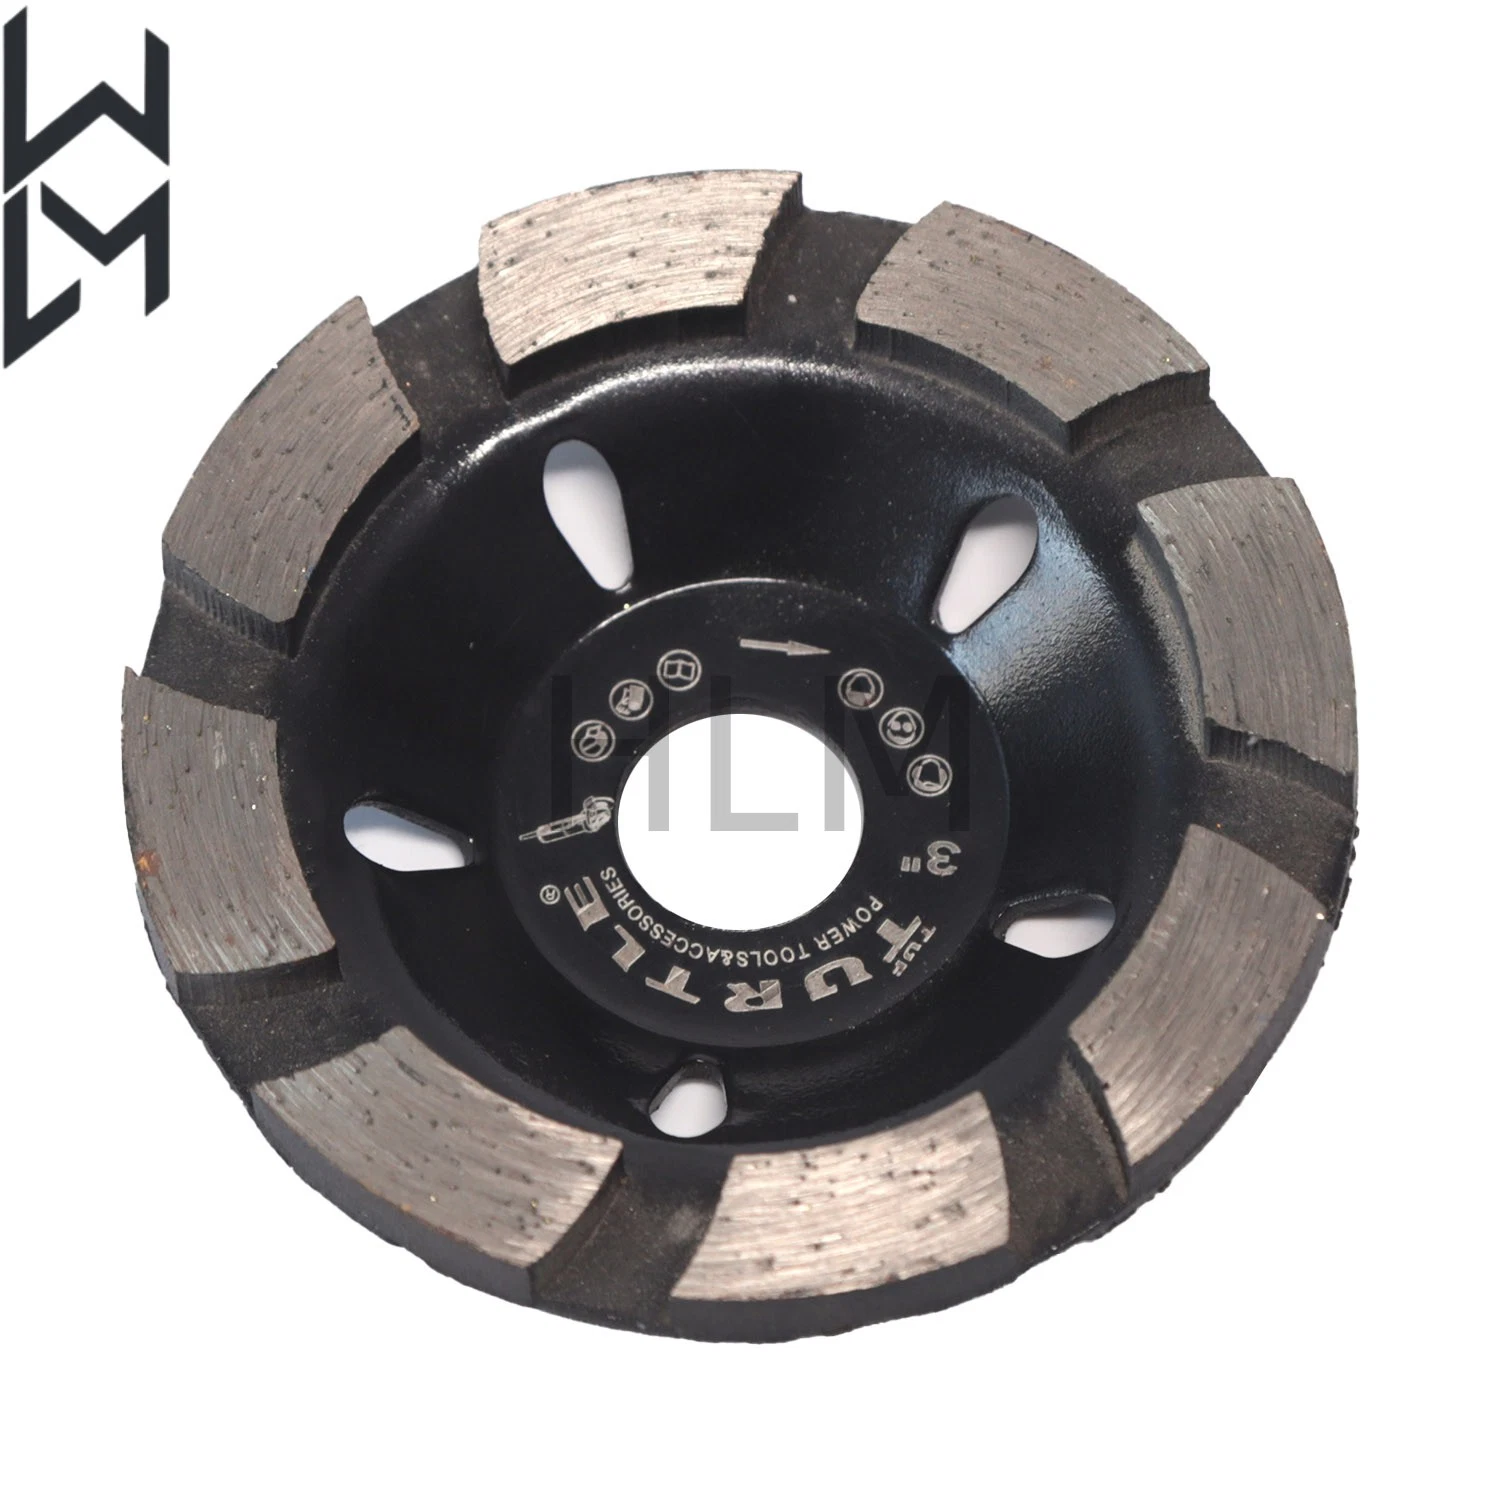 Diamond Tool Turbo Row Diamond Cup Wheel Grinding for Masonry Concrete Terrazzo Marble with Three-Stage Segments